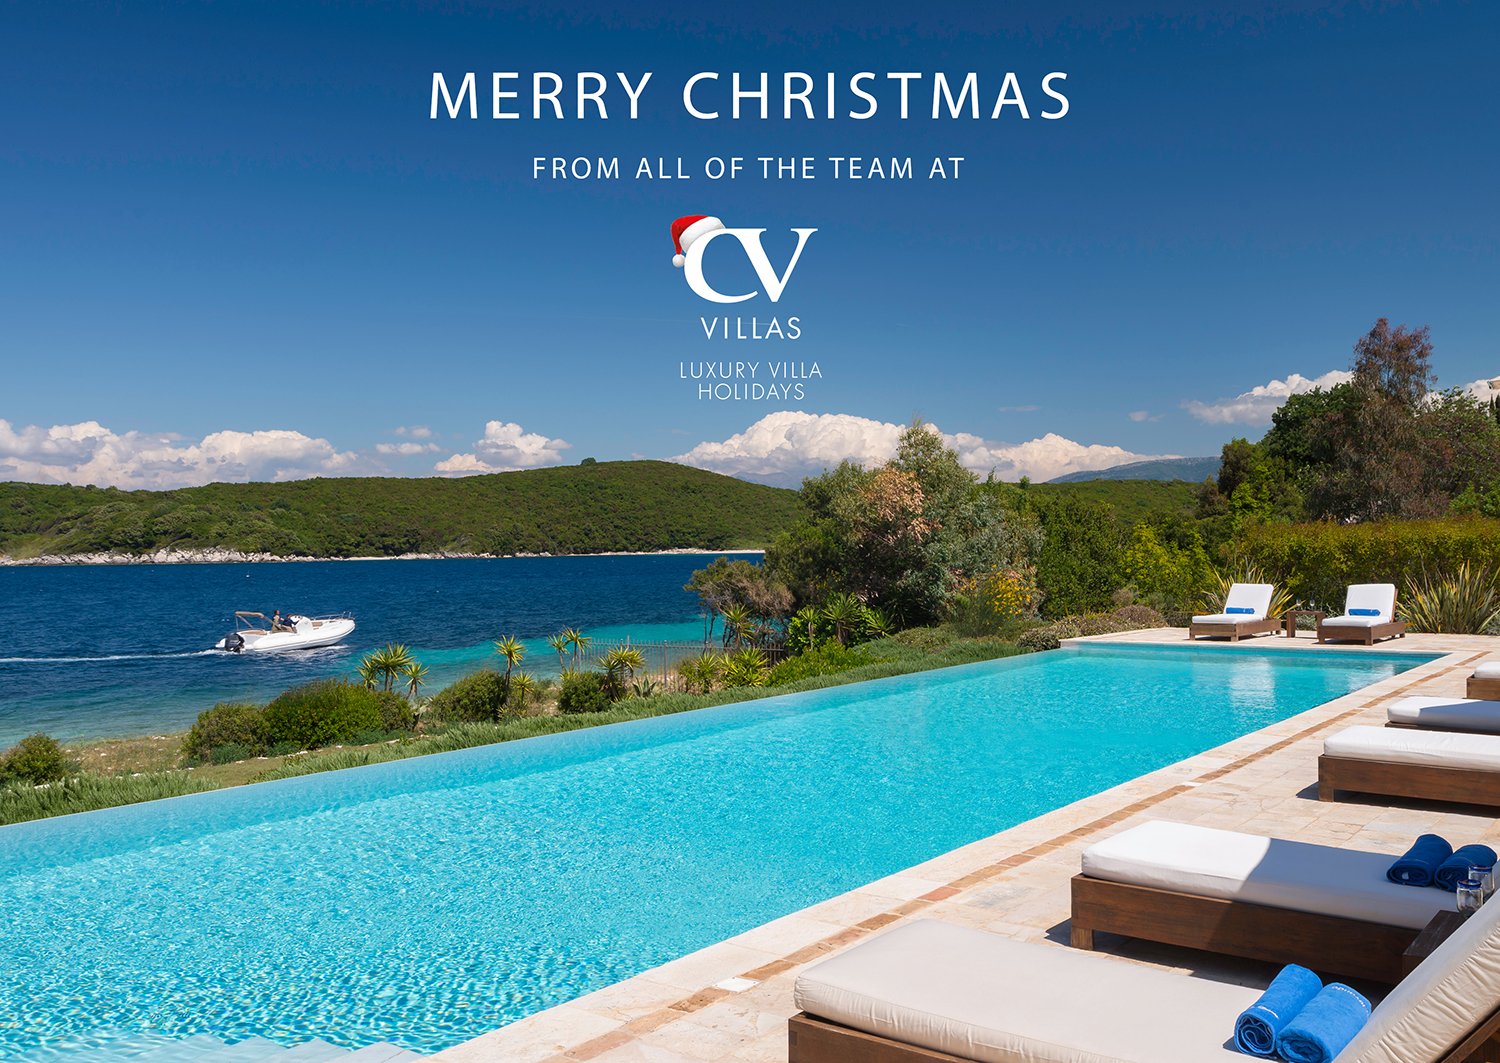 Cv Villas Merry Christmas From Everyone At Cv Villas